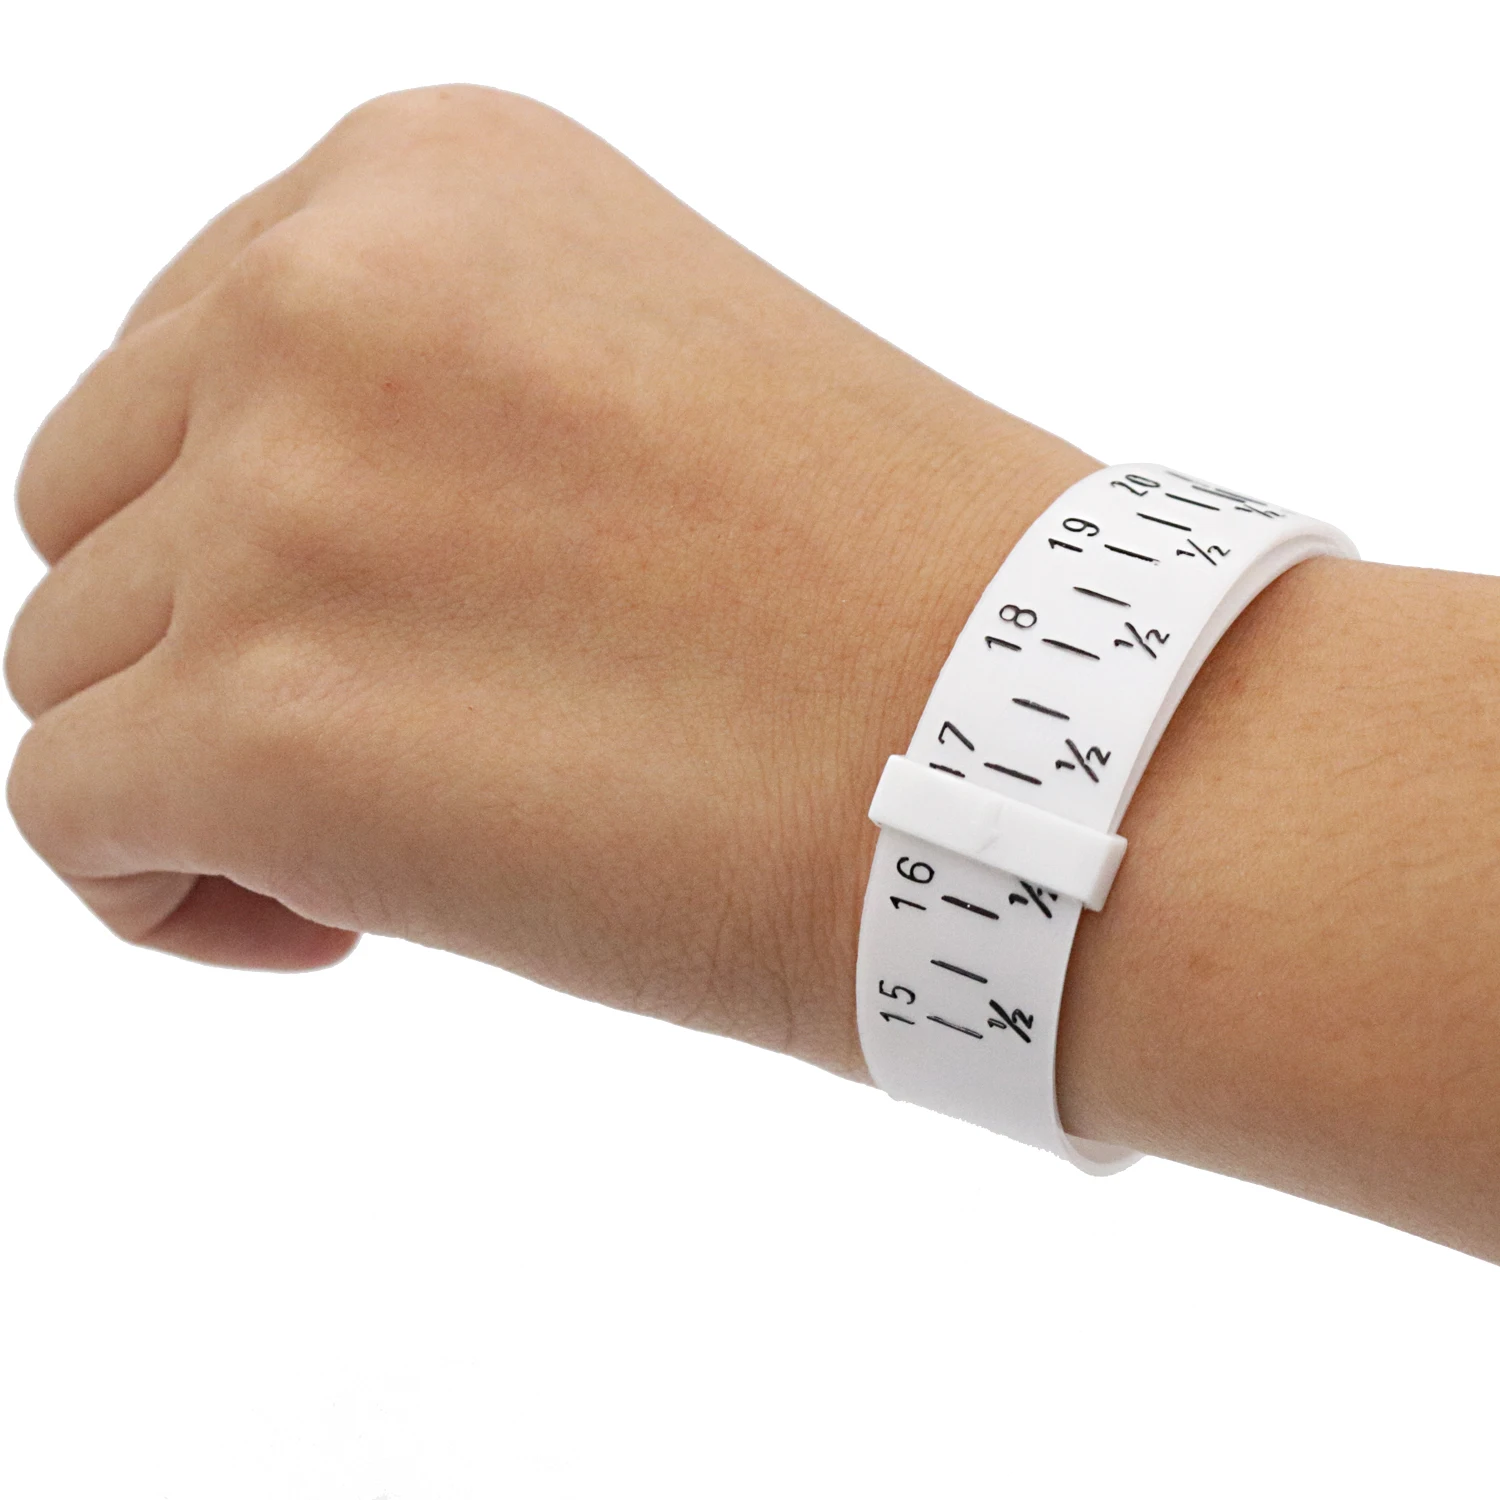 2 in 1 Bracelet Sizer & Ring Sizer Measuring Tool, 15-25 Bracelet